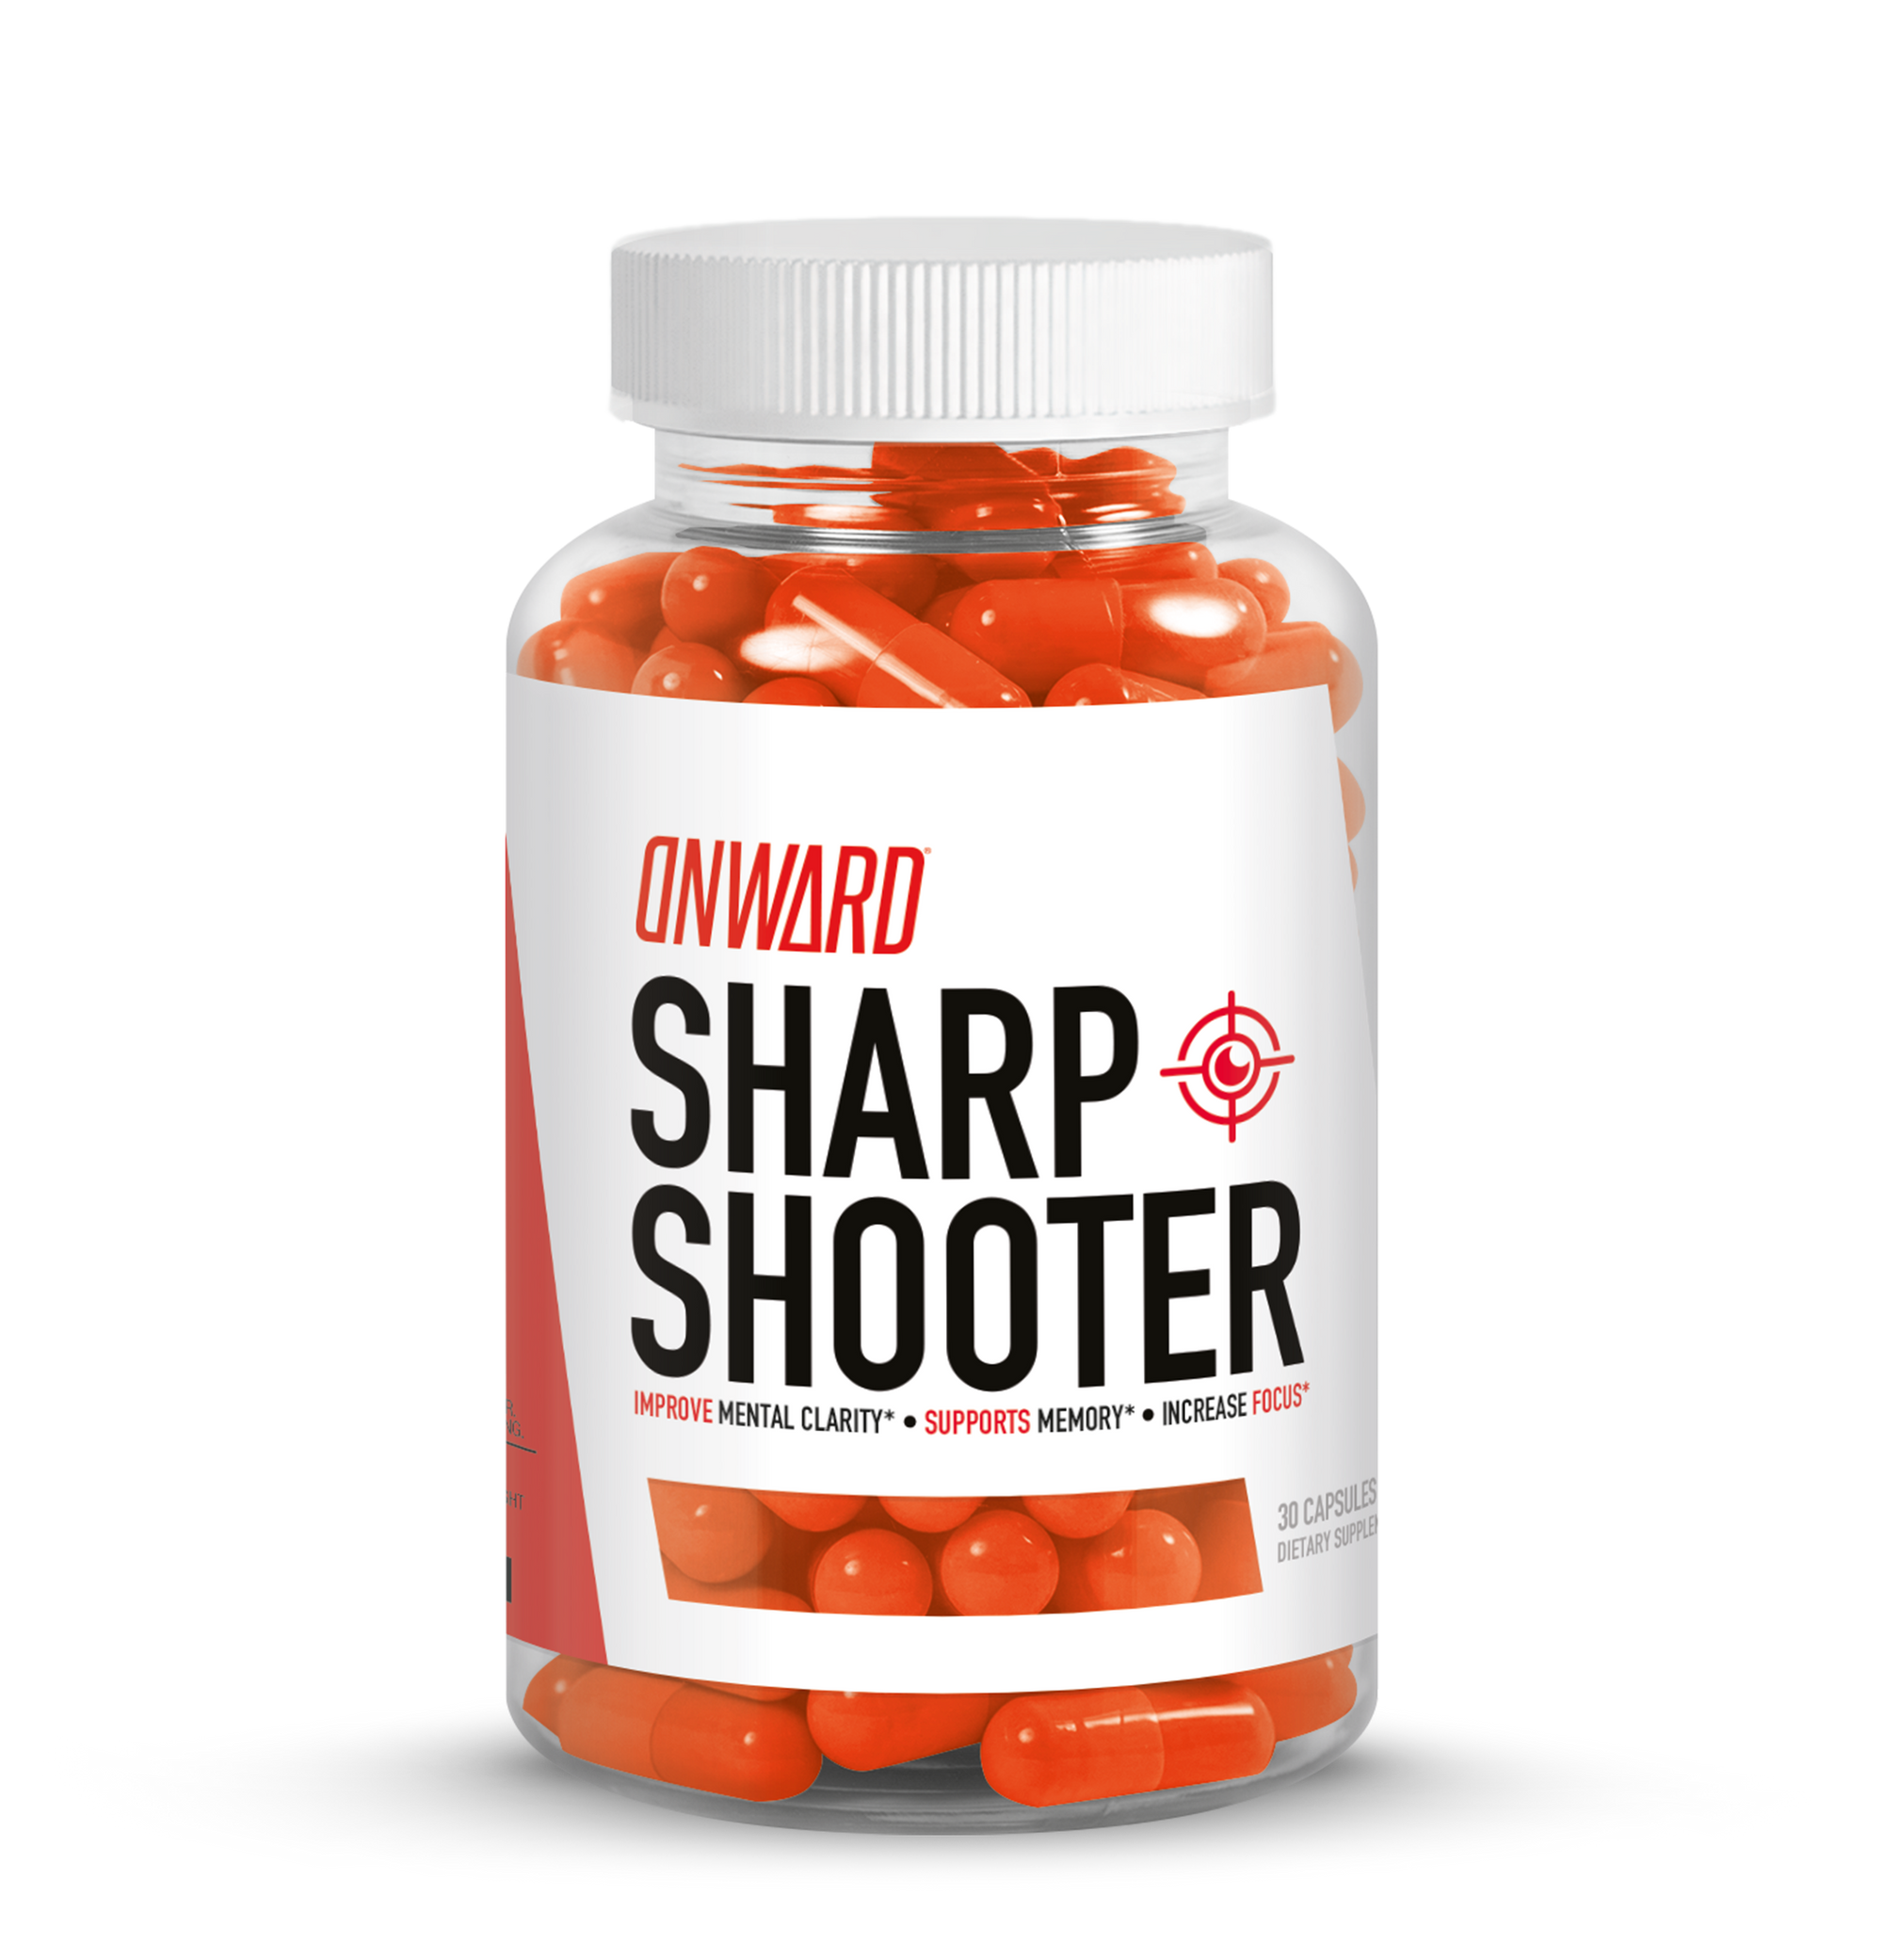 The Sharp Shooter